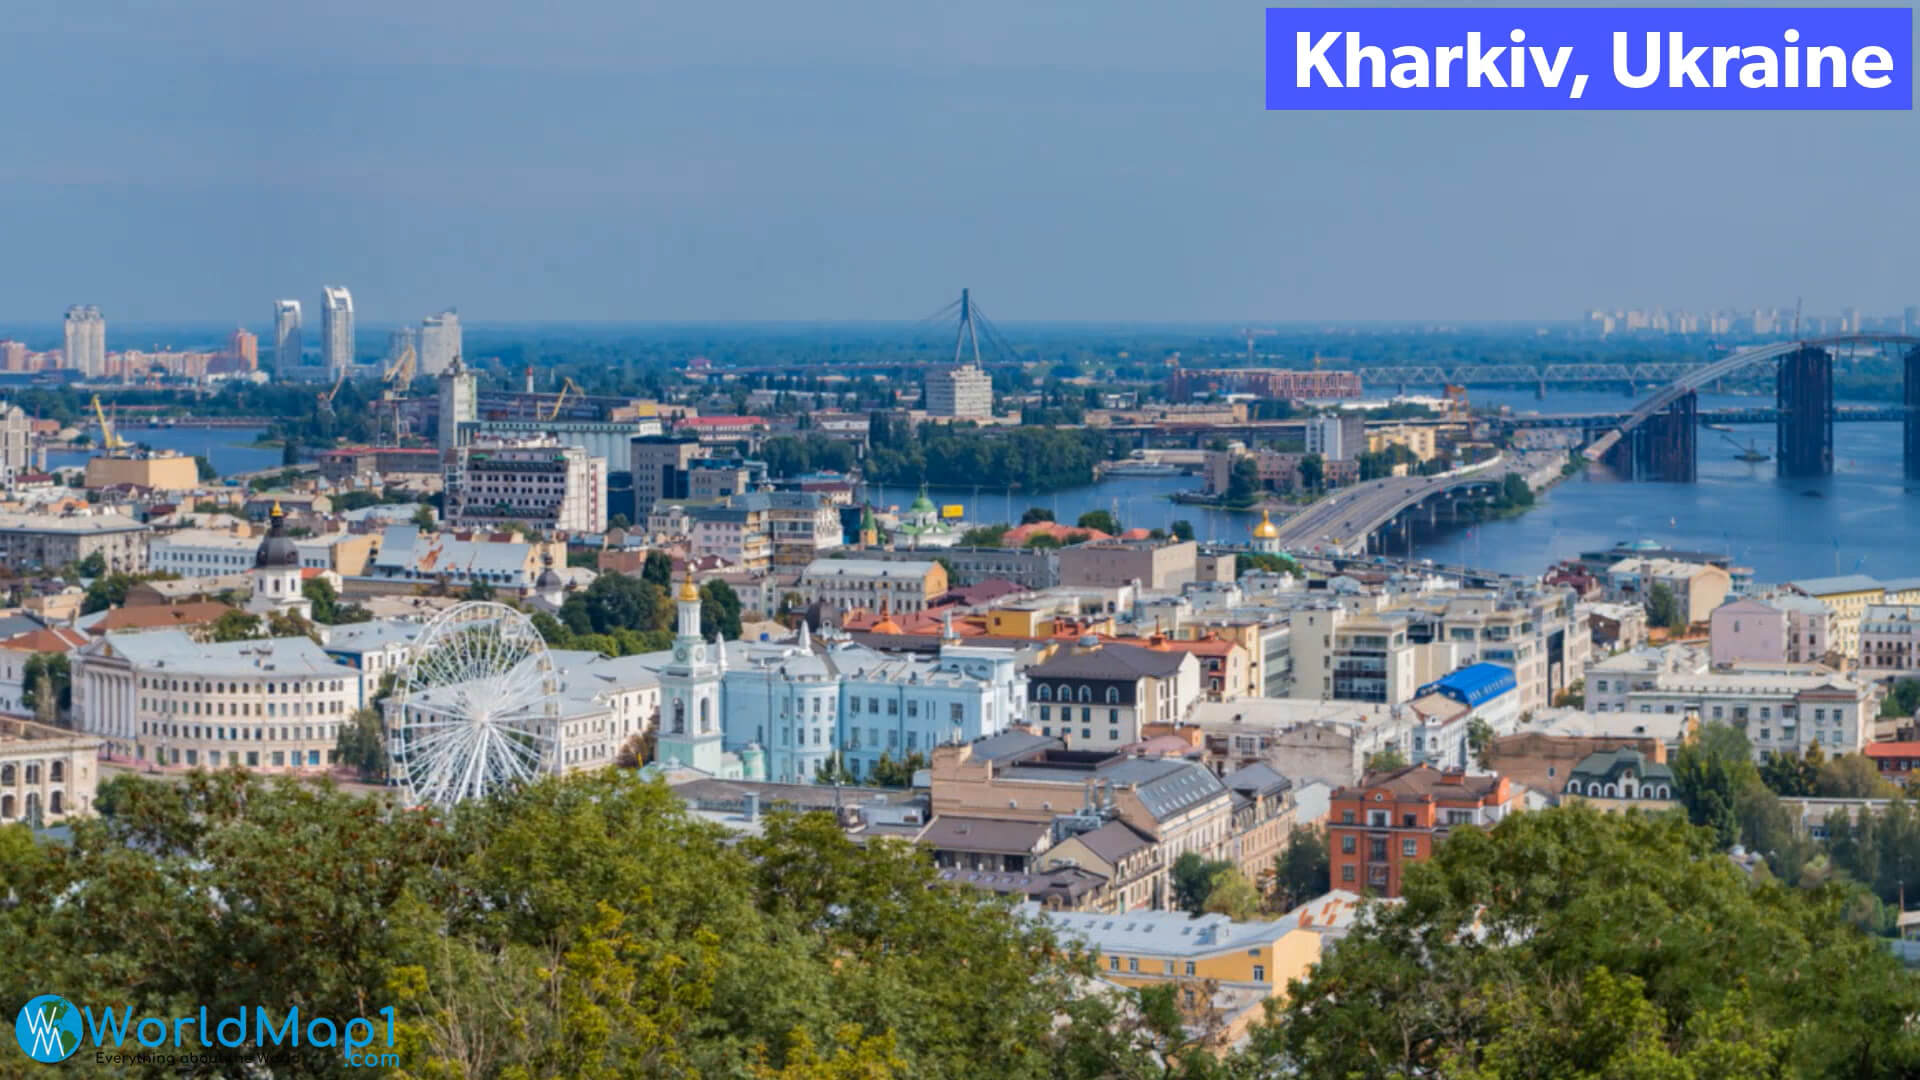 Downtown of Kharkiv Ukraine